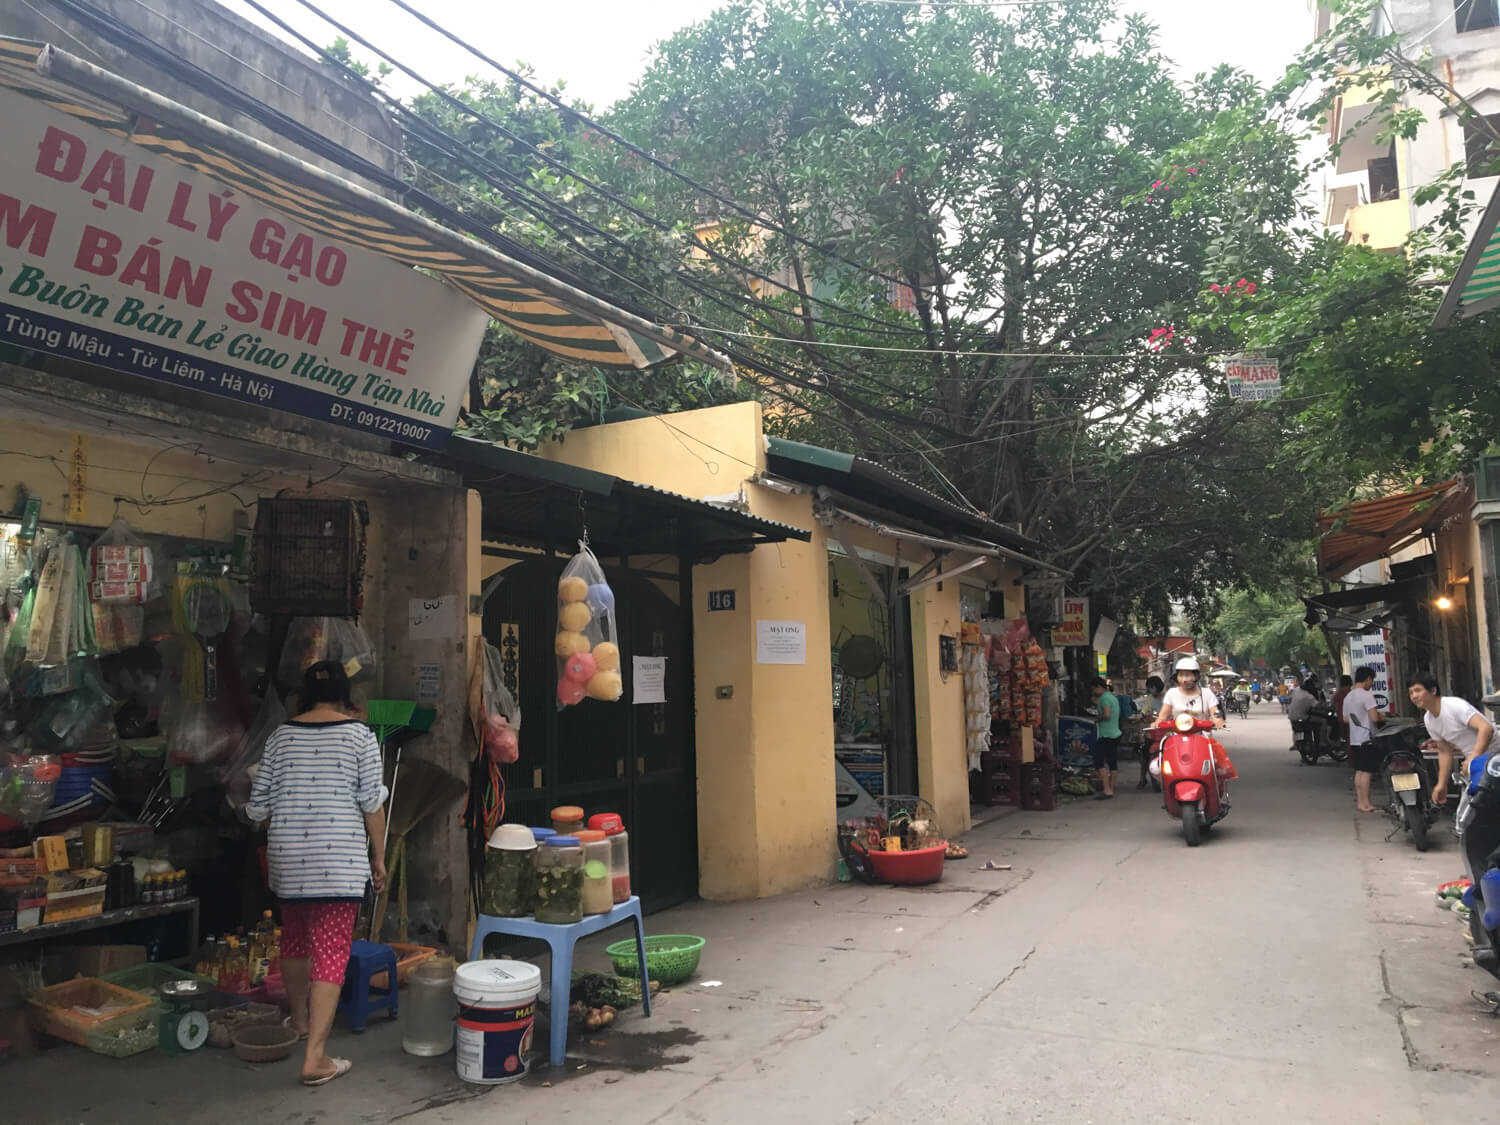 vietnam - ハノイ郊外の様子とベトナムに思うこと - 旅ログ, ハノイ, アジア観光, アジア町